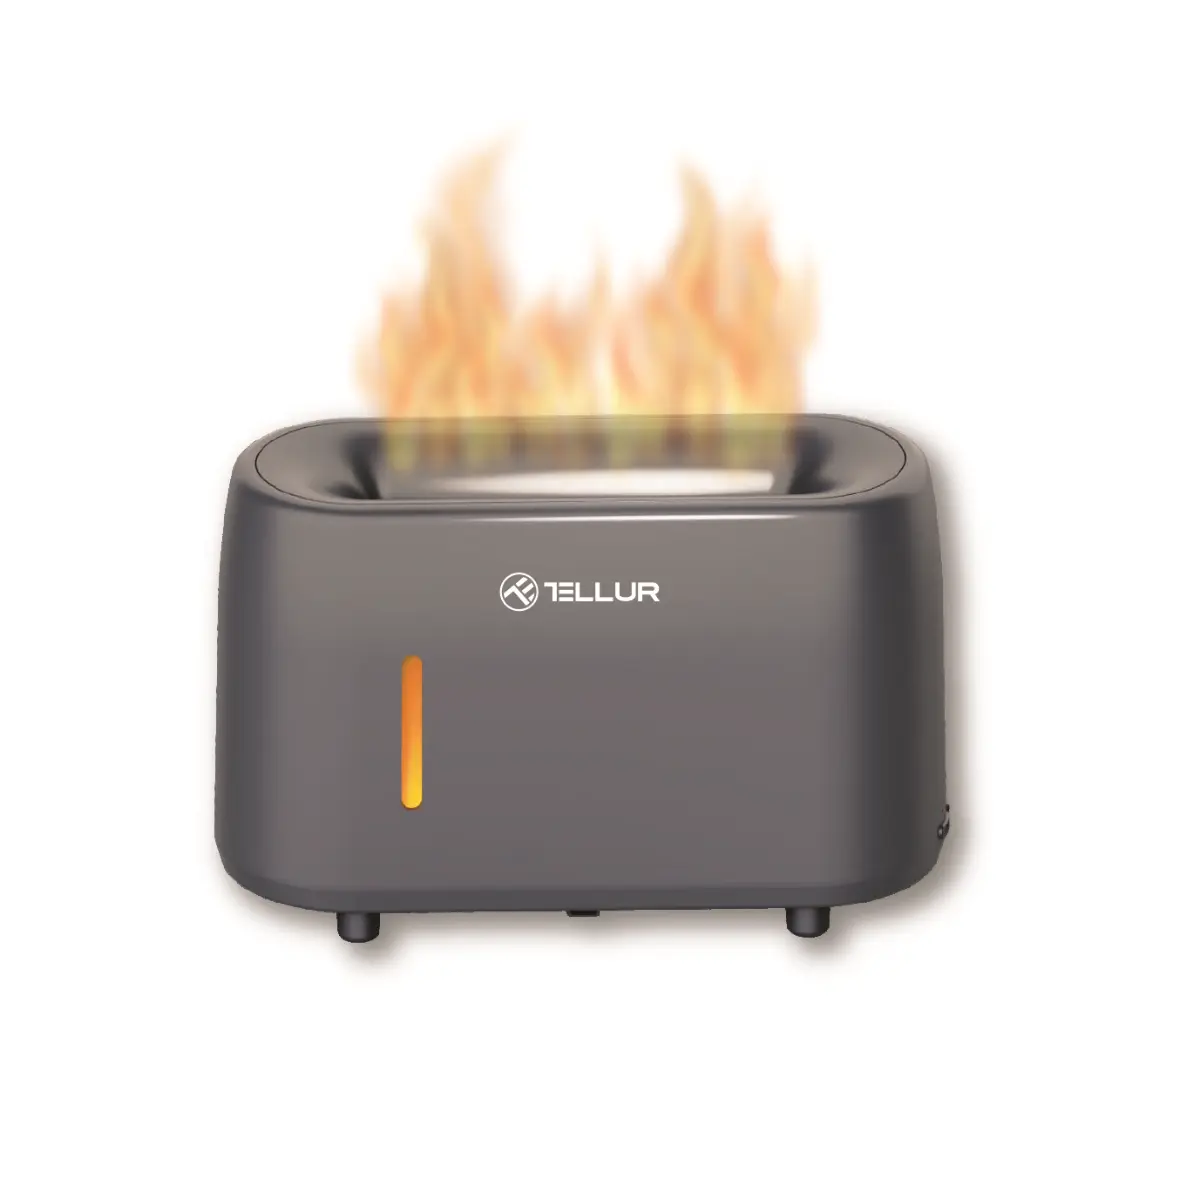 Difuzor aromaterapie Tellur Flame, 240ml, 12 ore, telecomanda, gri